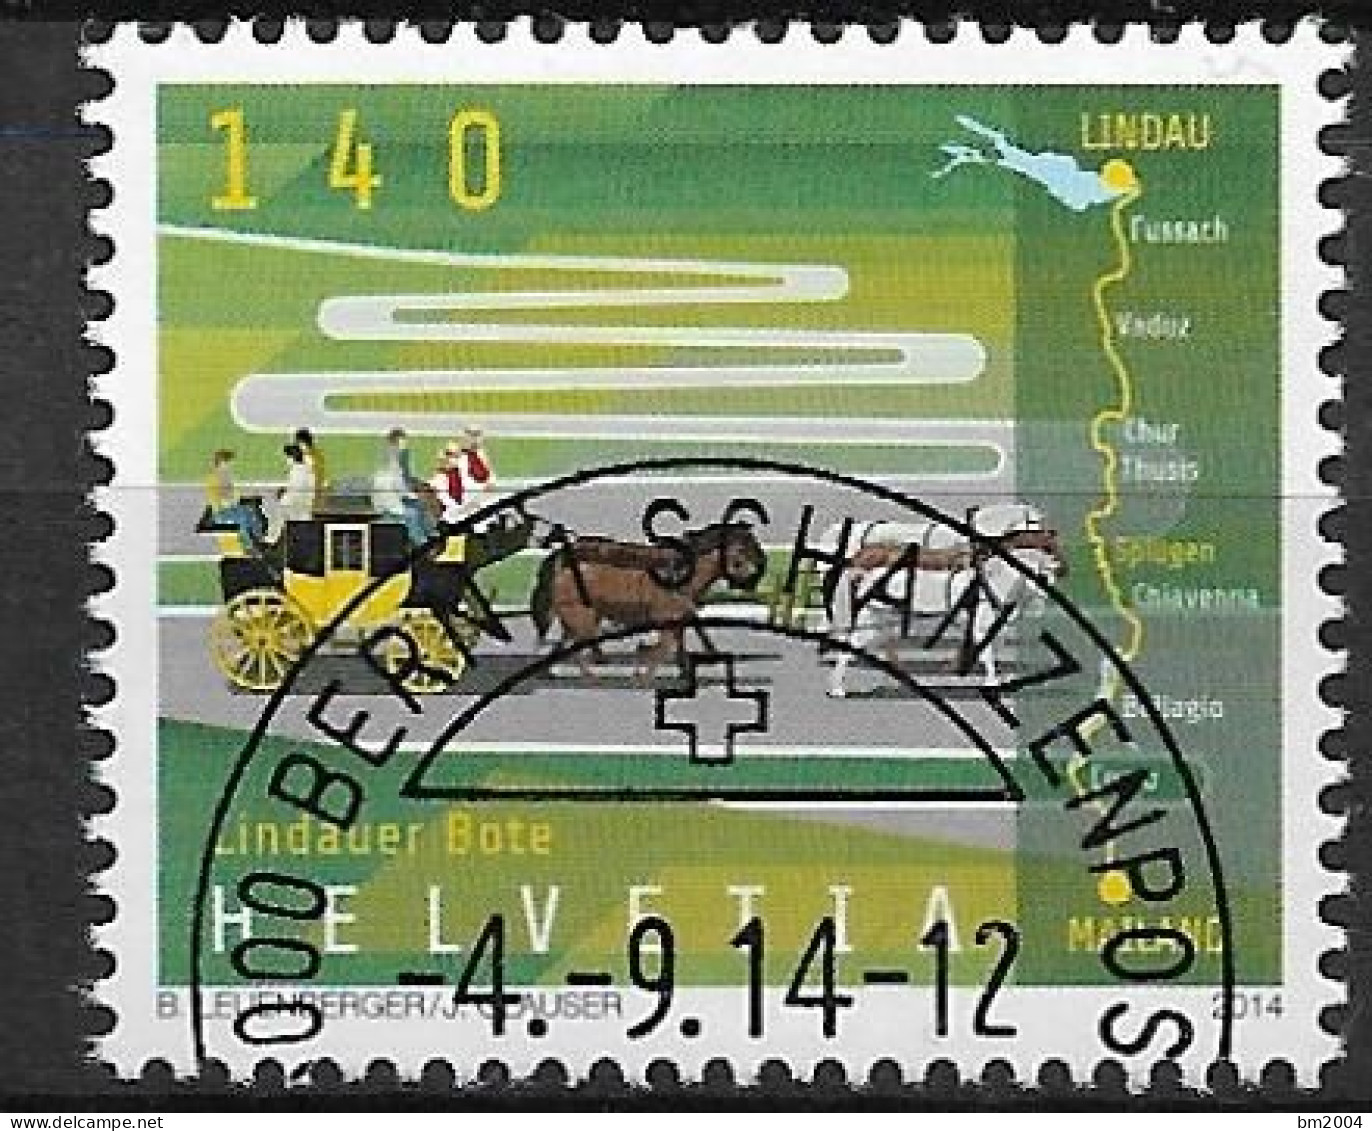 2014 Schweiz   Mi. 2365 FD-used   Der Lindauer Bote. - Used Stamps